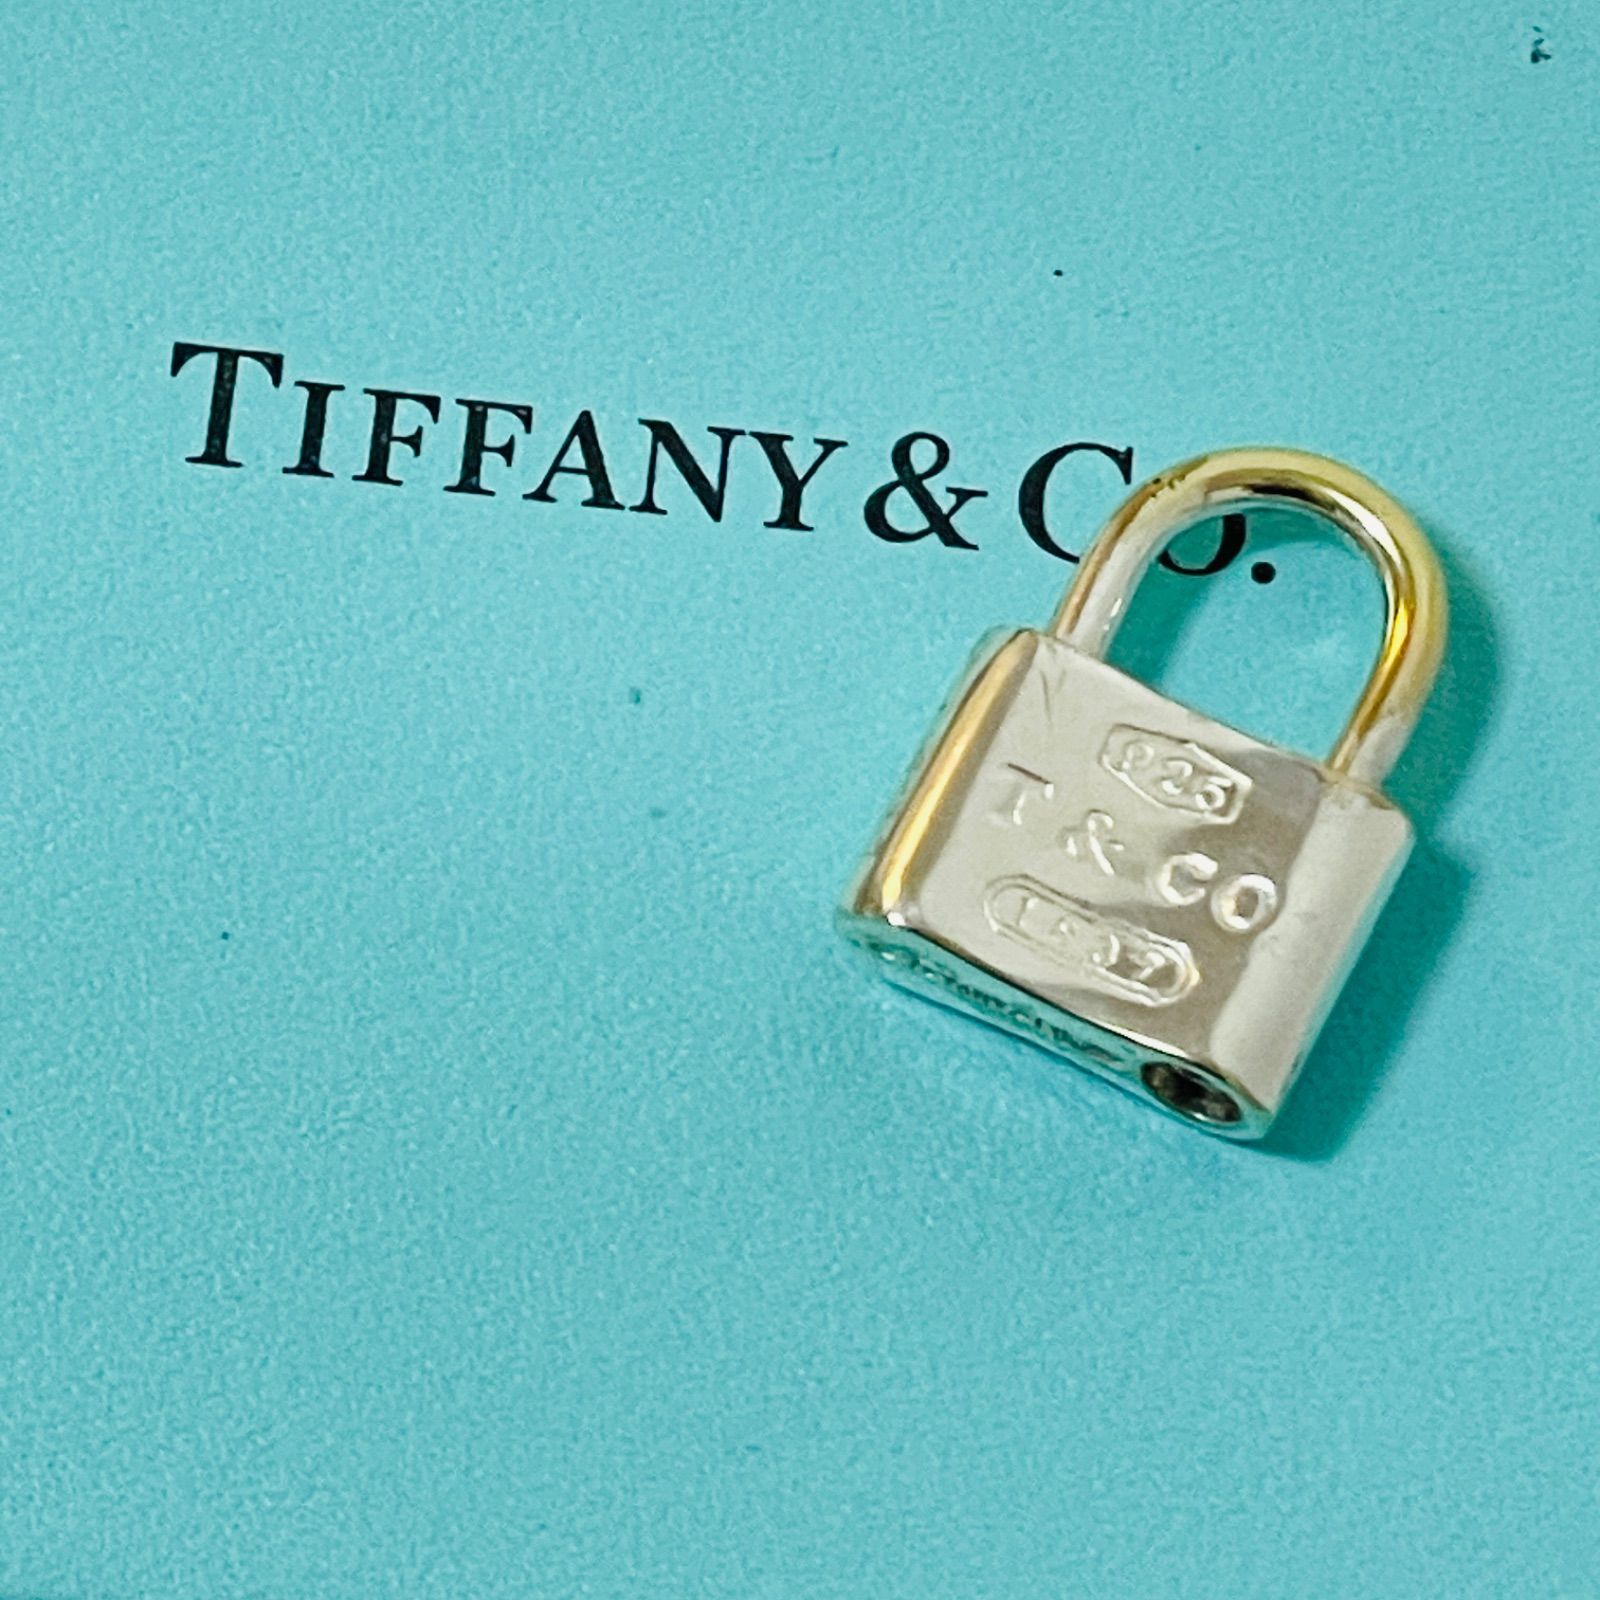 Tiffany & Co. ティファニー カデナロック チャーム パドロック 南京錠